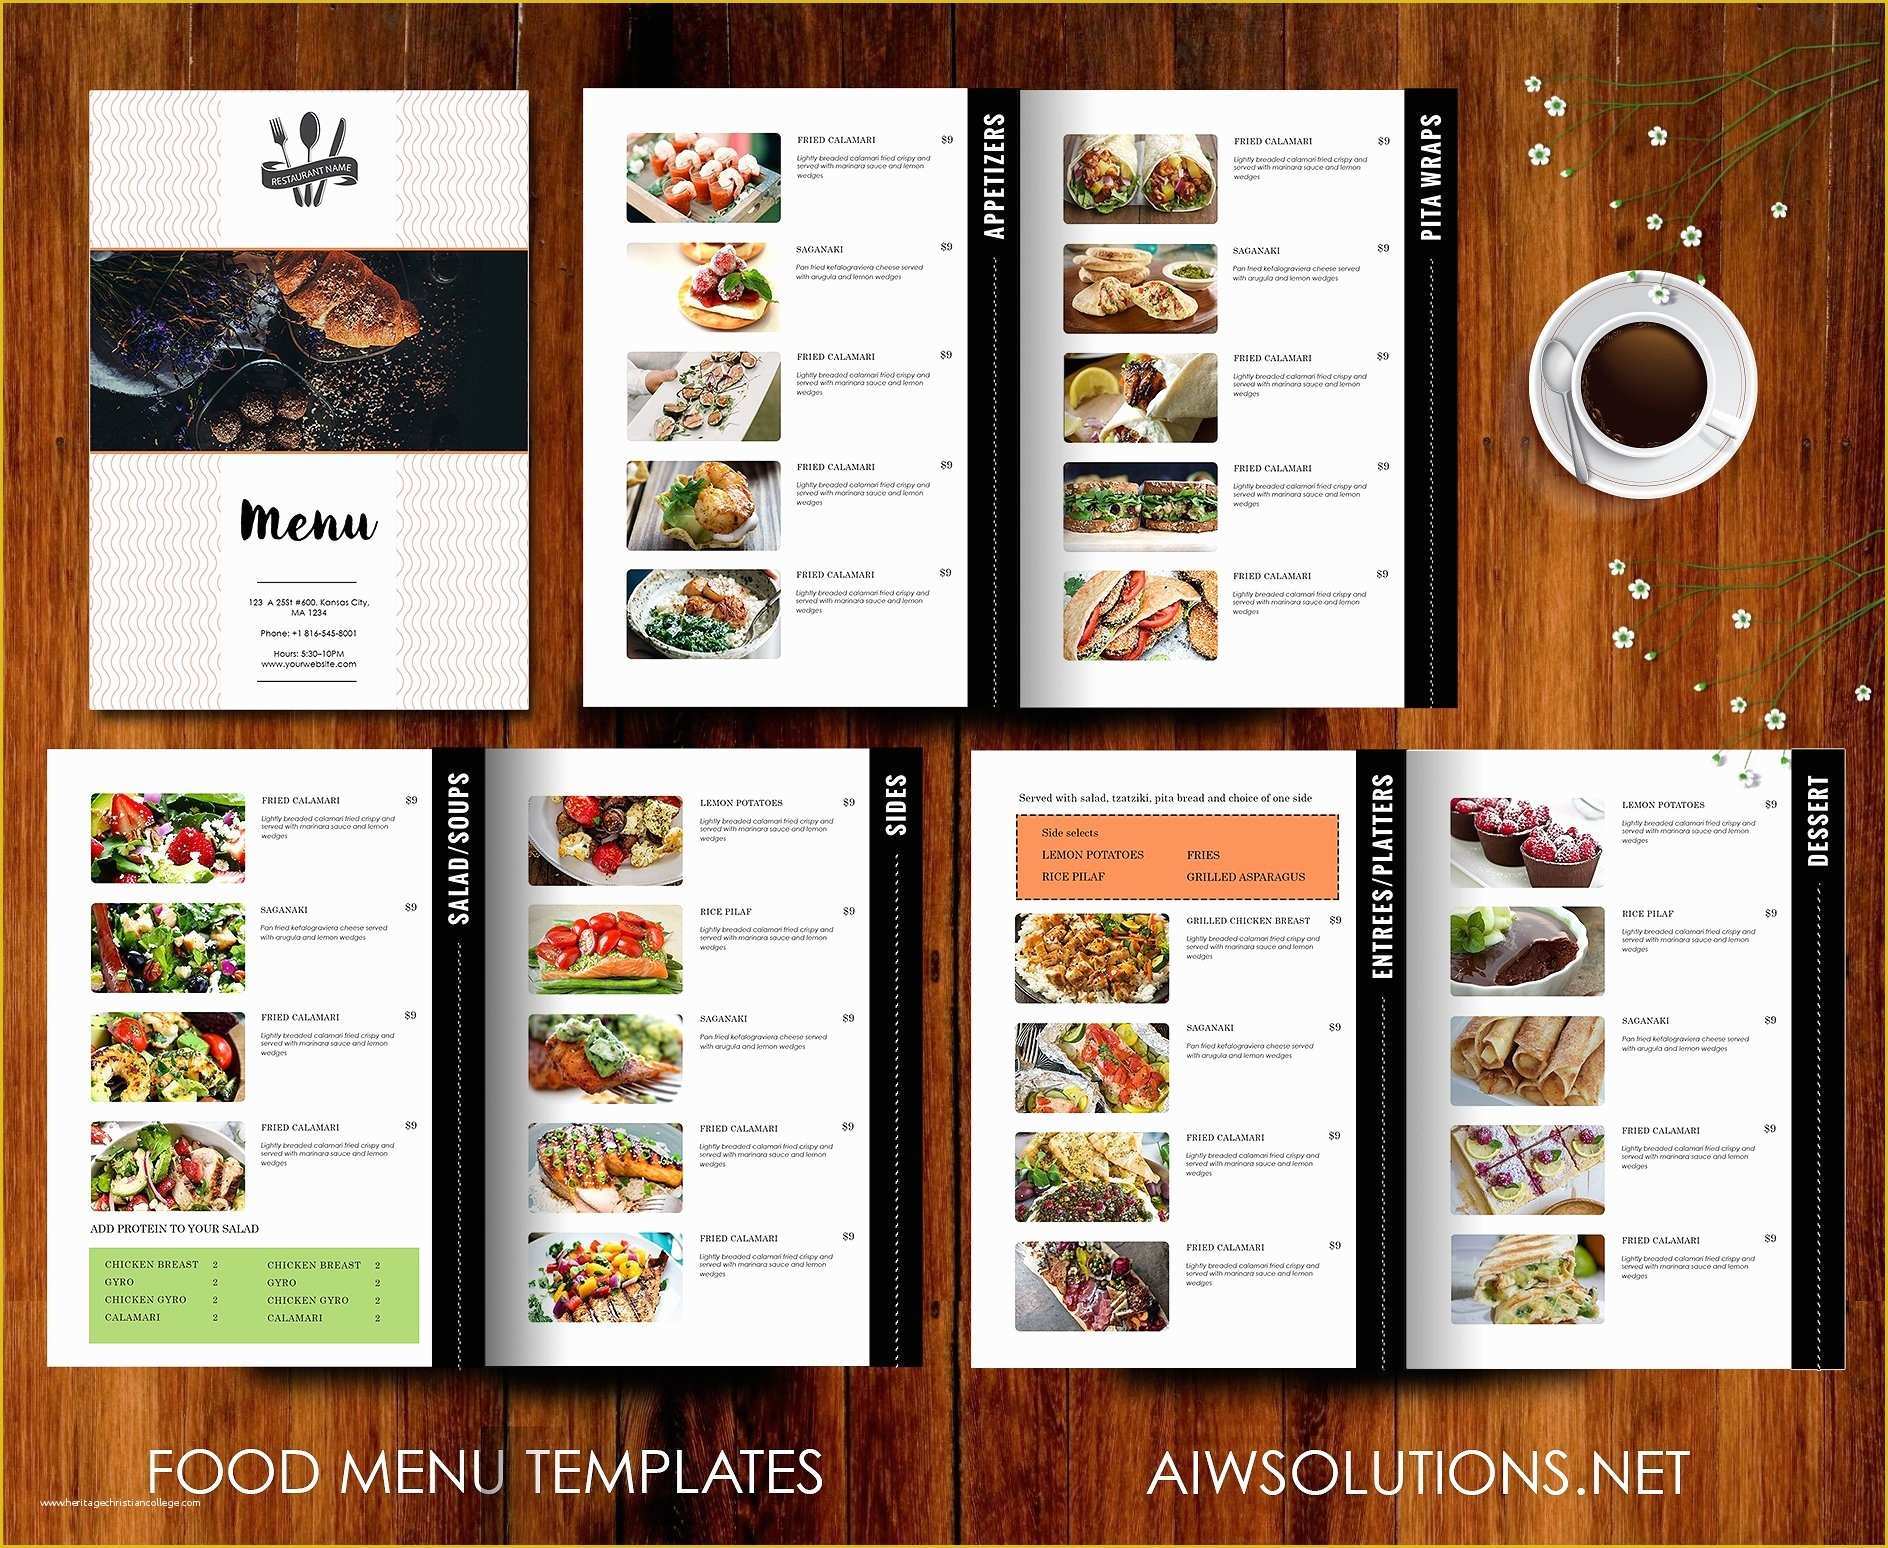 Free Online Menu Templates Of 9 Essential Restaurant Menu Design Tips